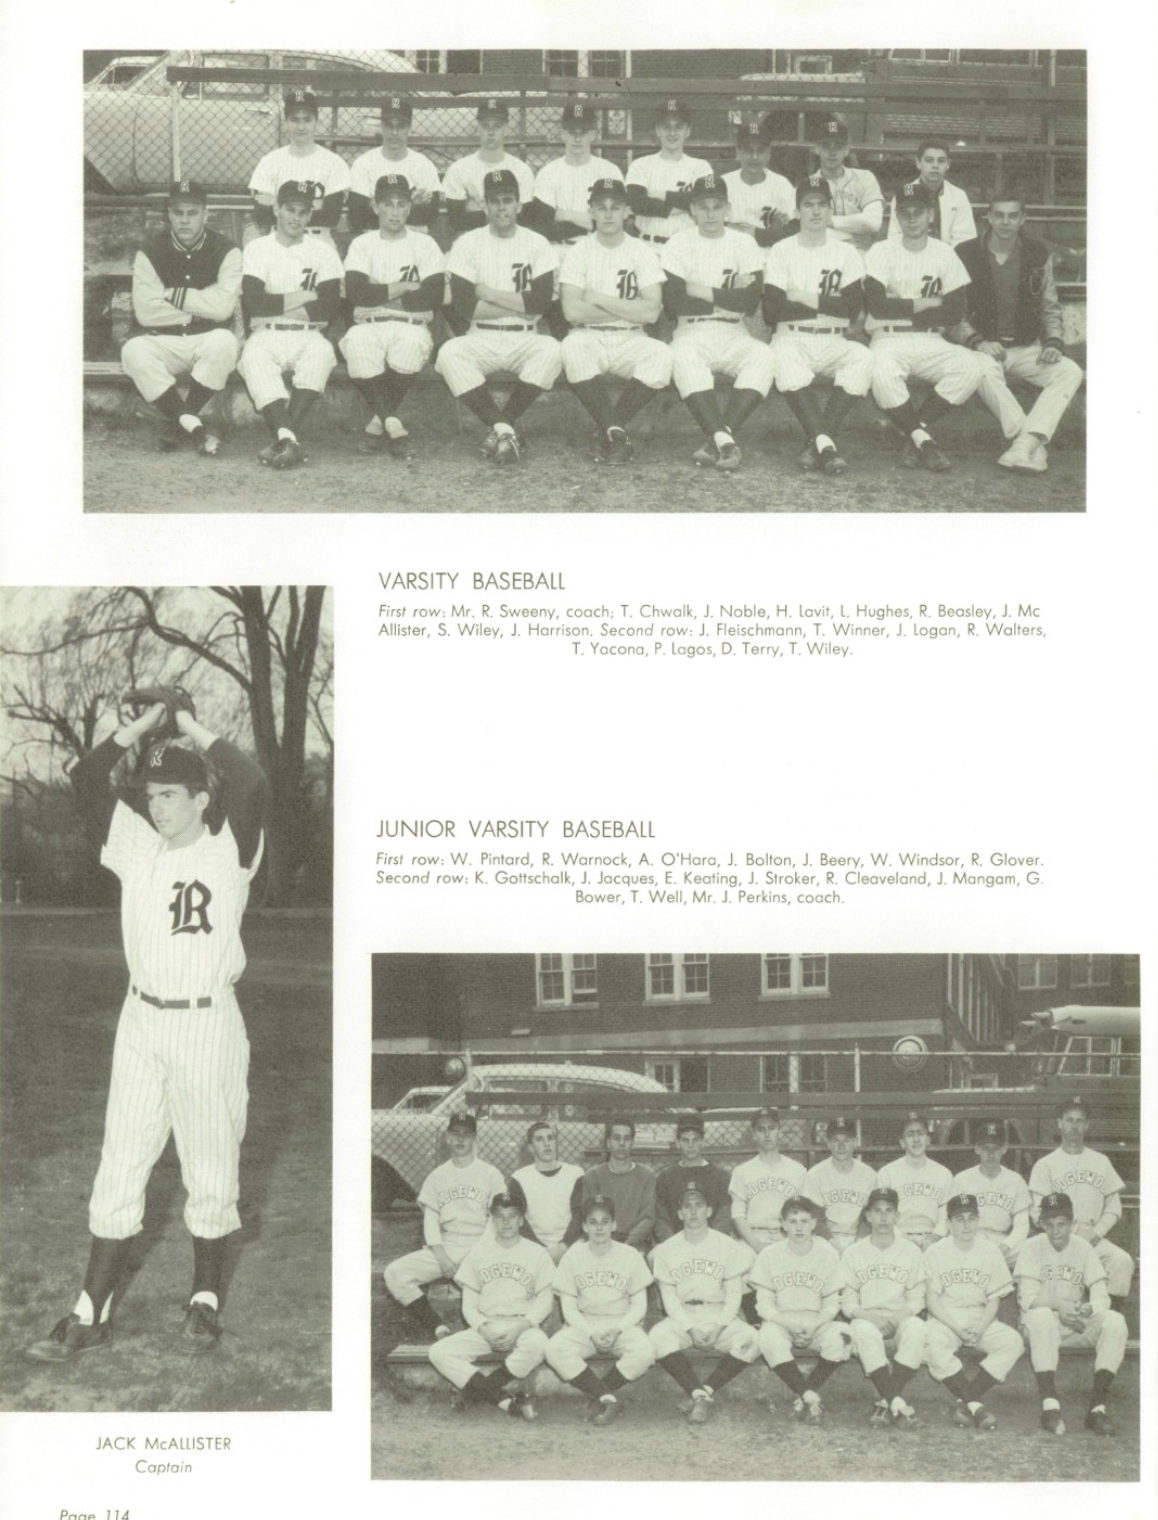 1963 Boys’ Baseball Team